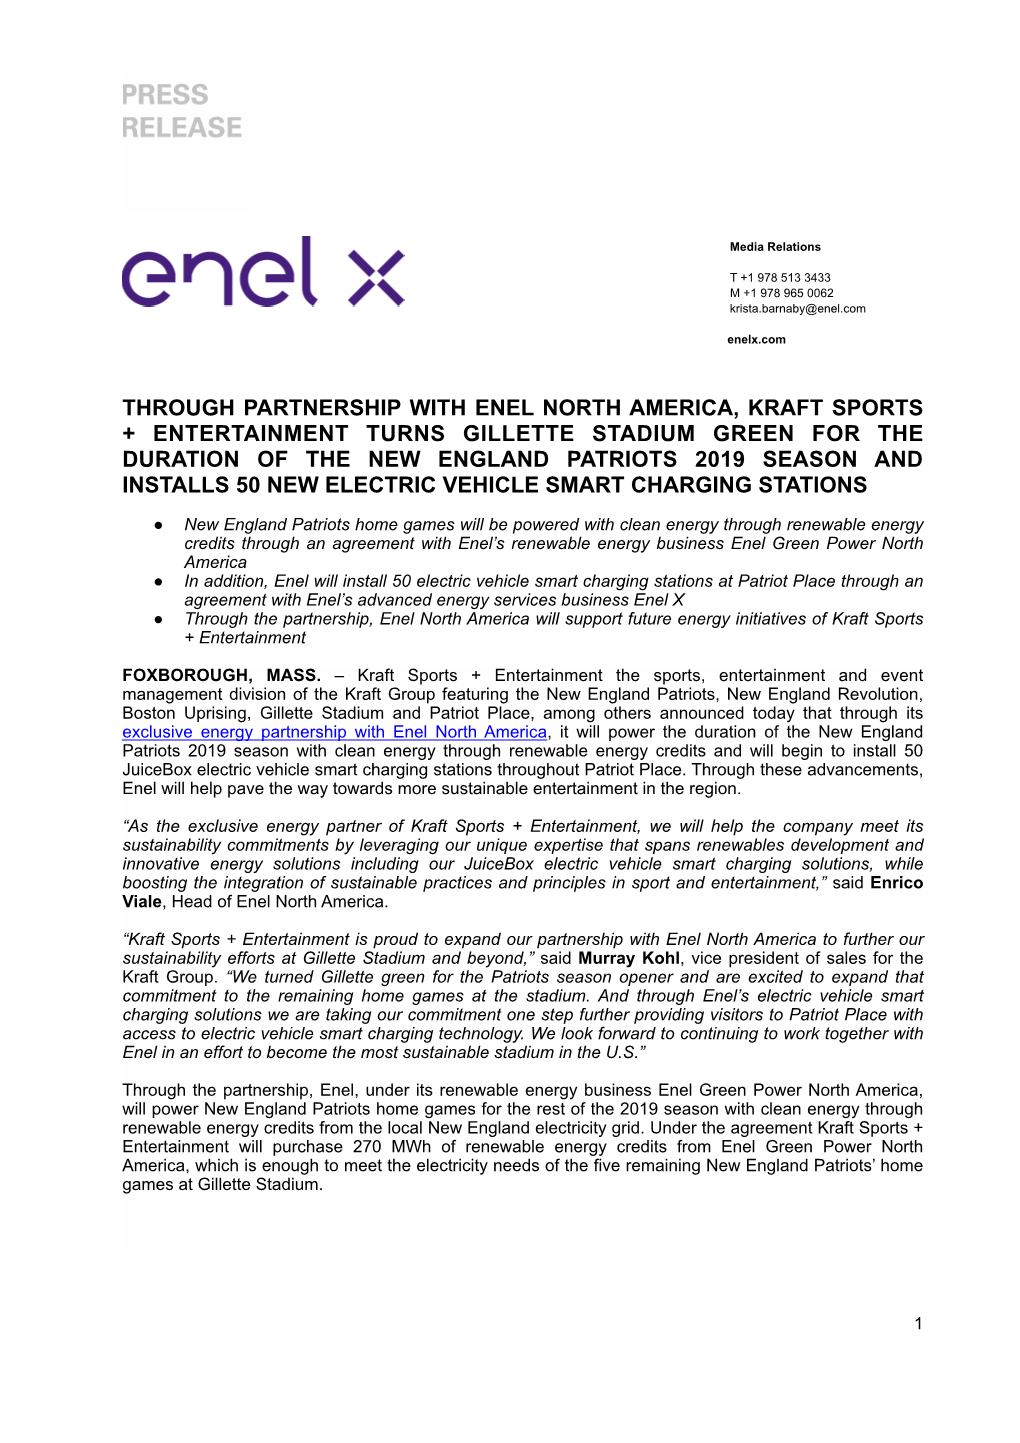 Through Partnership with Enel North America, Kraft